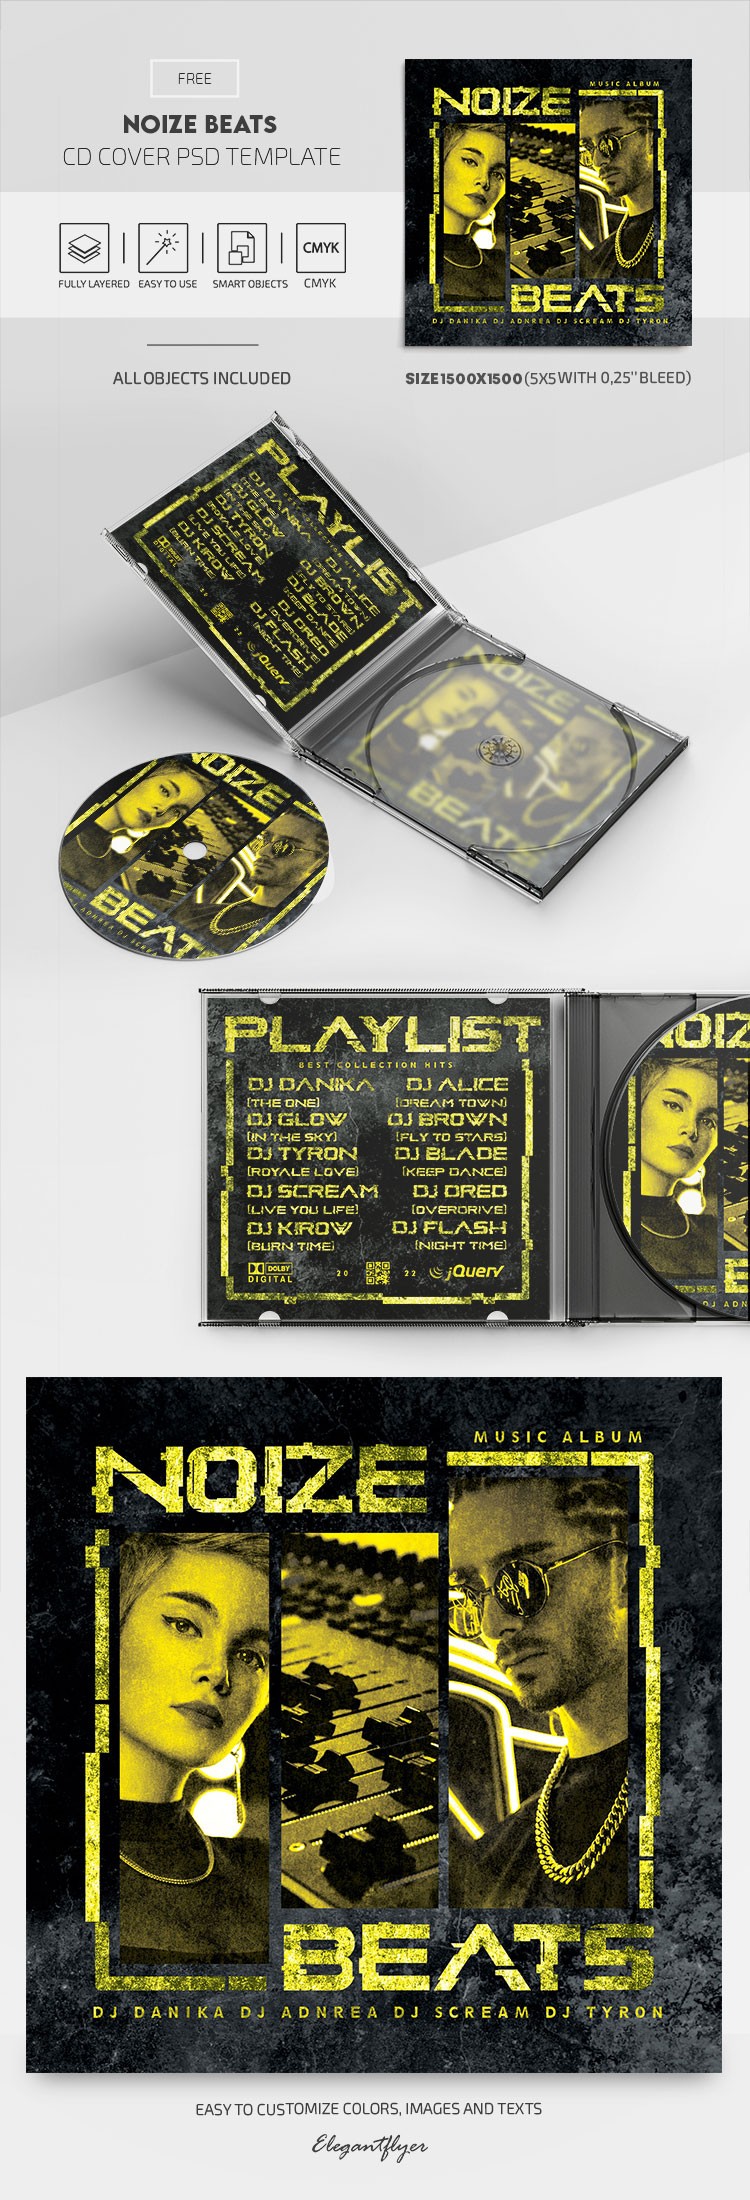 Noize Beats CD Cover by ElegantFlyer